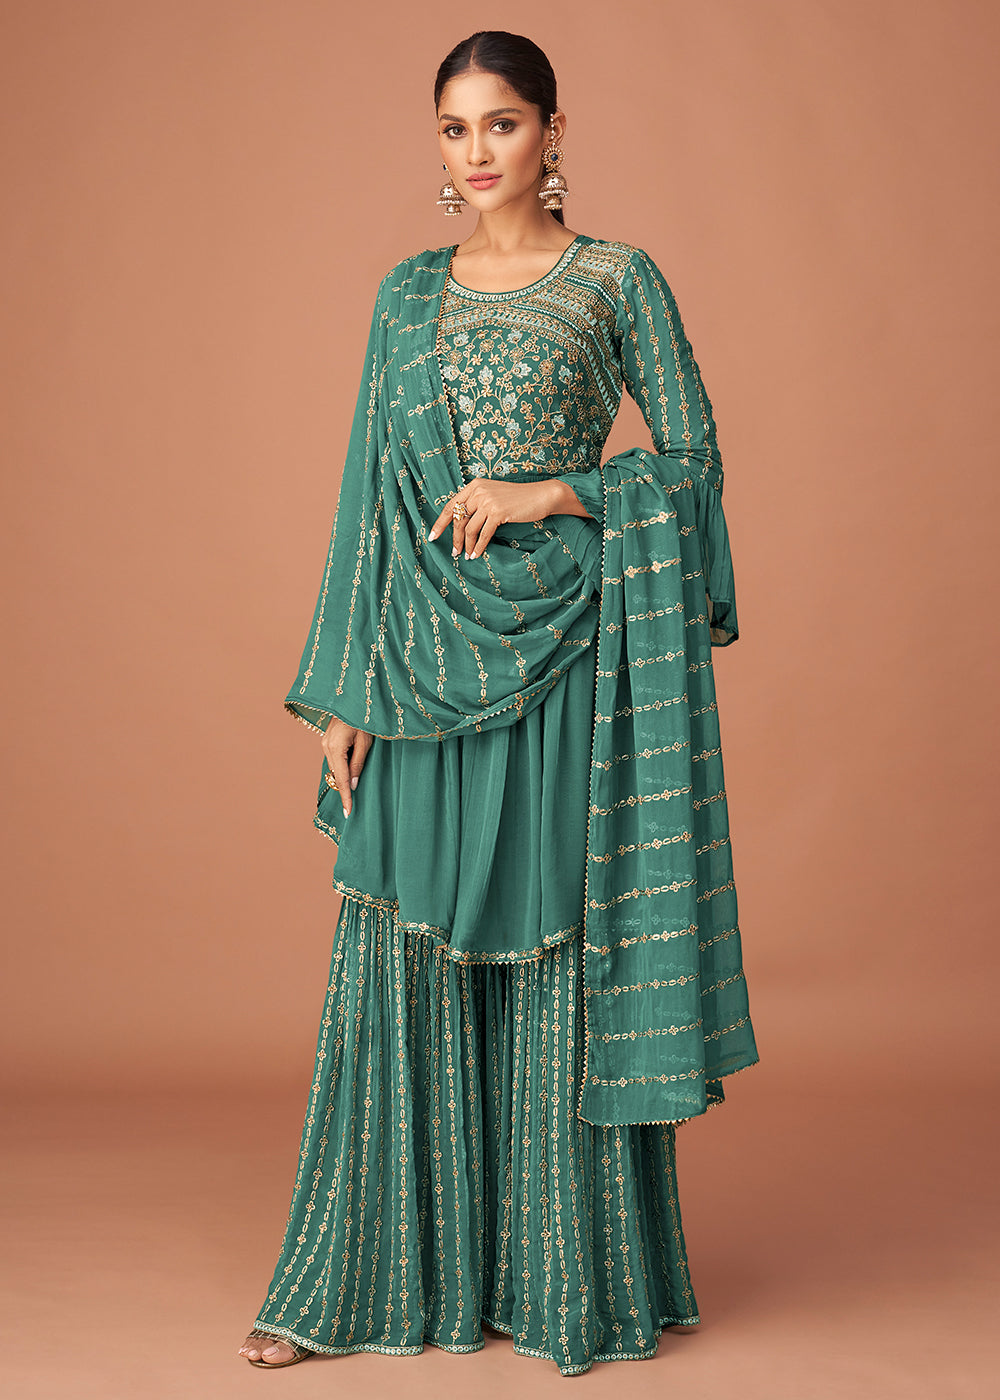 Buy Pakistani Style Designer Teal Blue Sharara - Peplum Sharara Suit